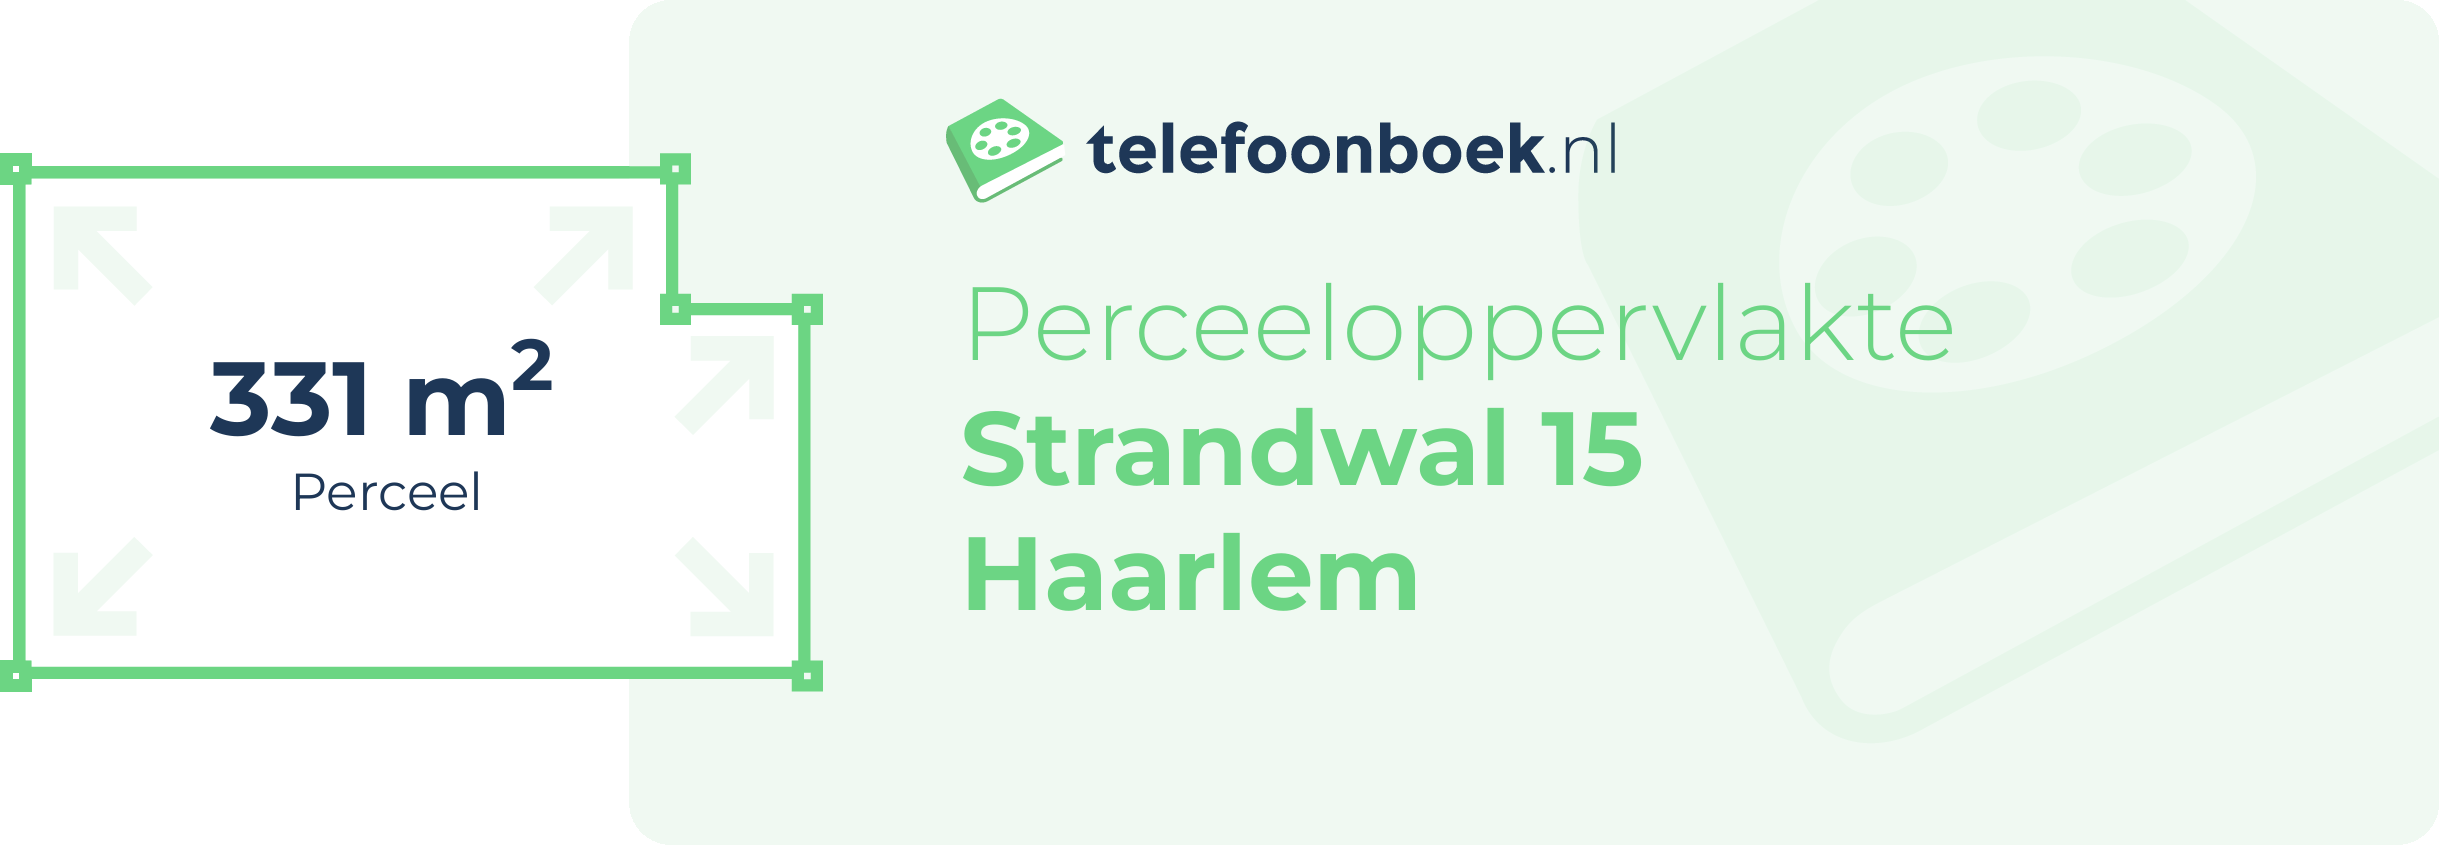 Perceeloppervlakte Strandwal 15 Haarlem